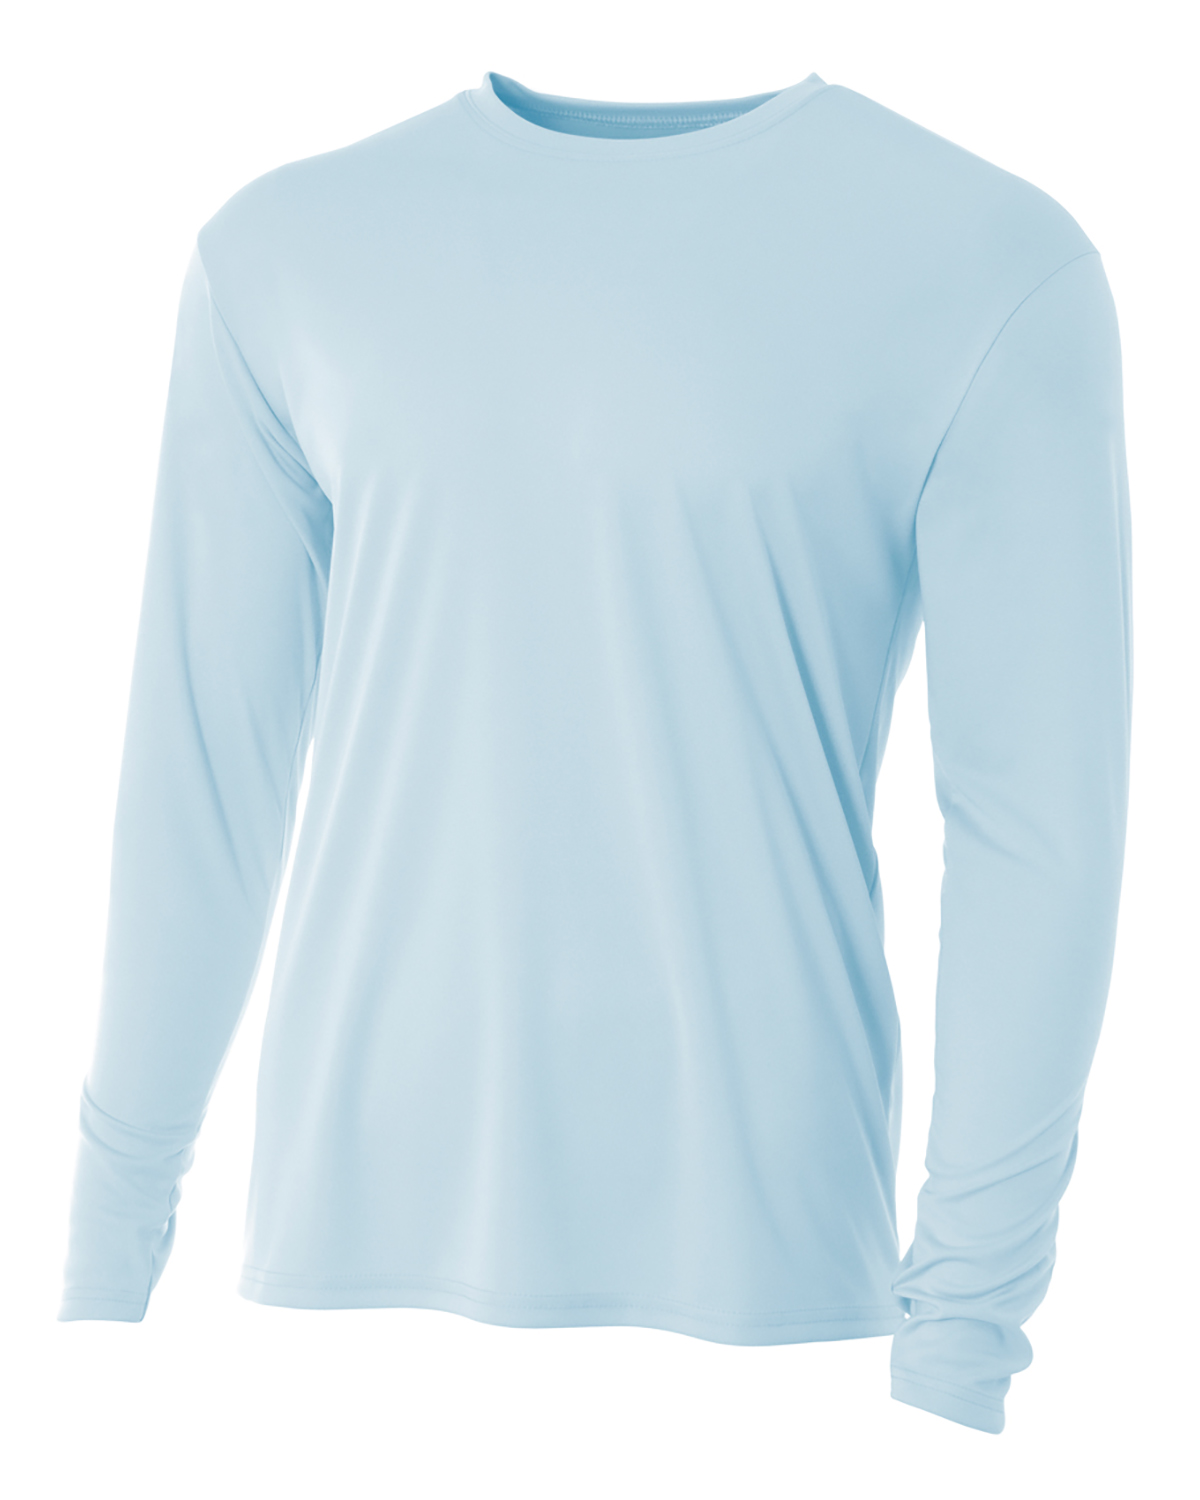 A4 B093041040 adult 4.0 oz Poly Cooling Performance Long Sleeve T-Shirt, Pastel Blue - Medium, Women's